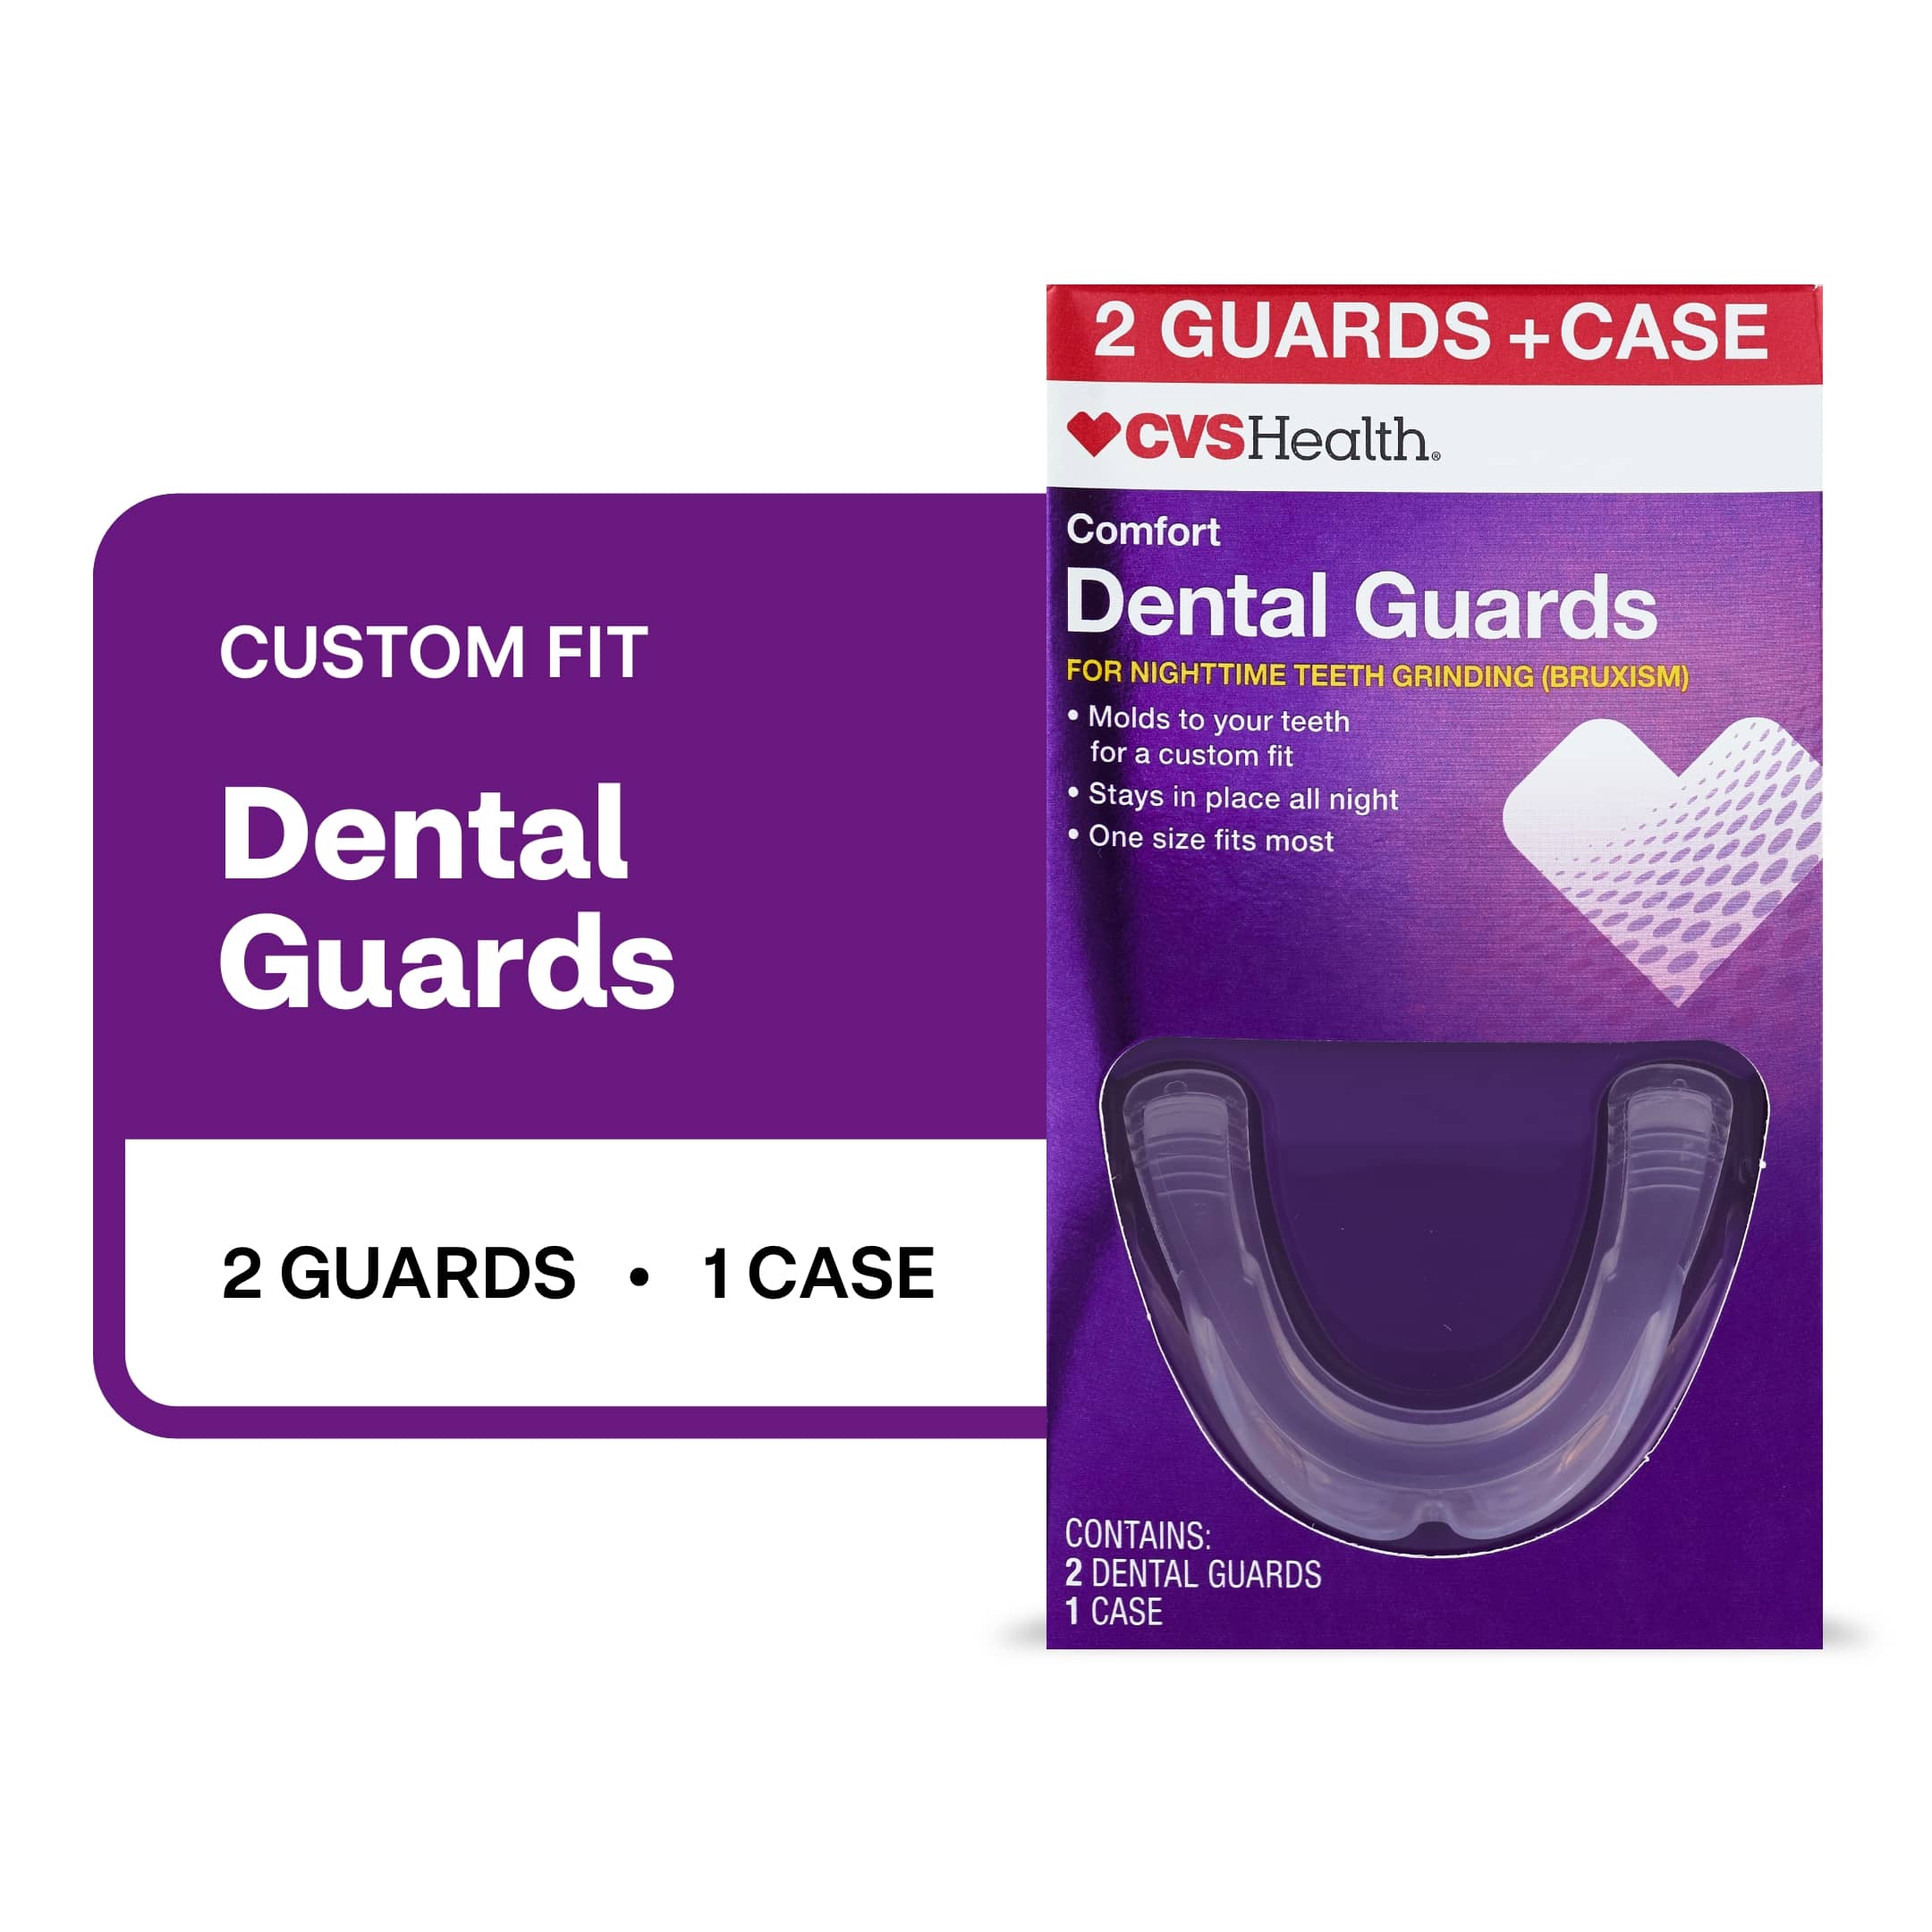 cvs health dental guards